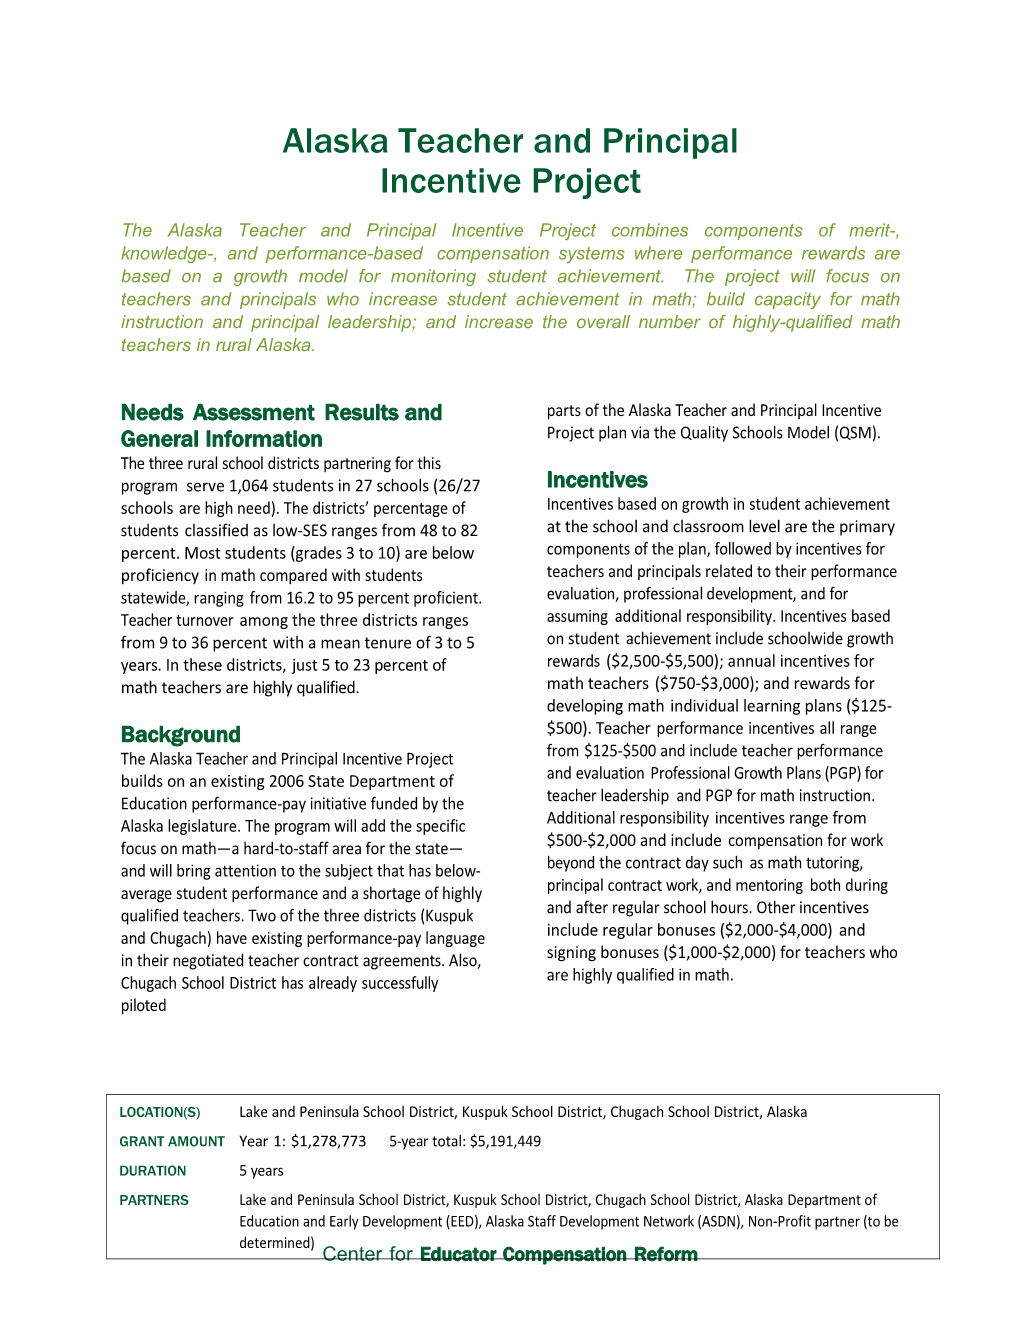 Alaska Teacher and Principal Incentive Project (MS Word)